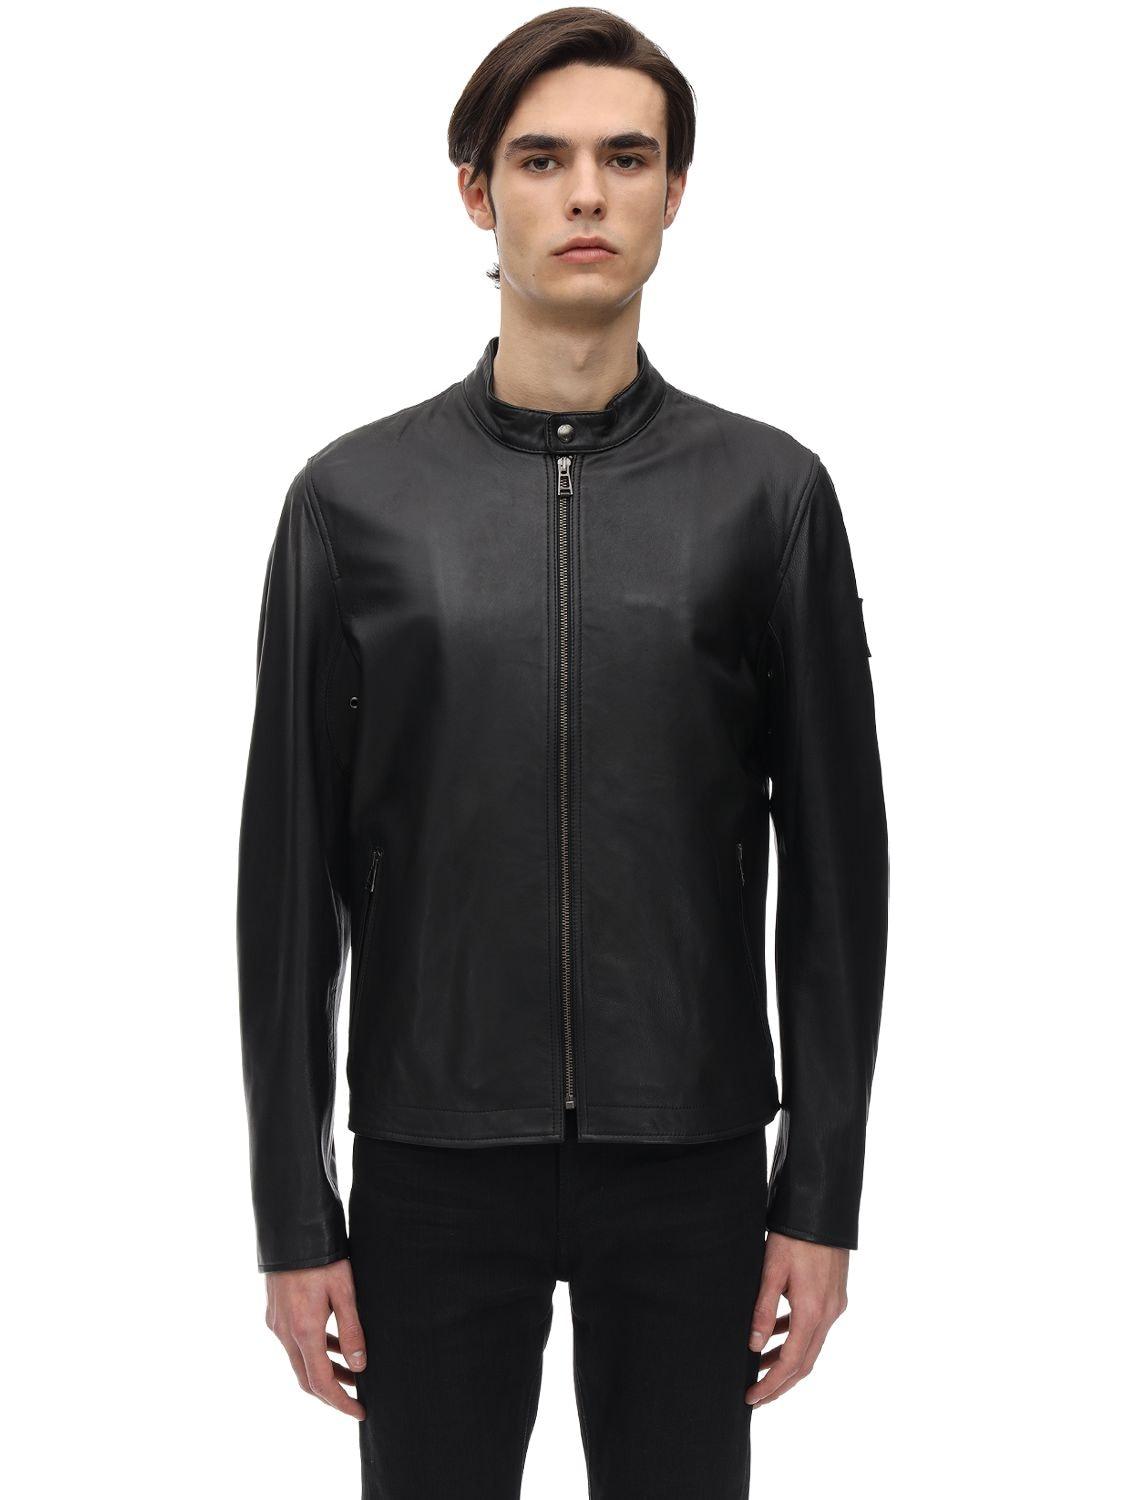 Belstaff Reeve Leather Jacket in Black for Men - Lyst